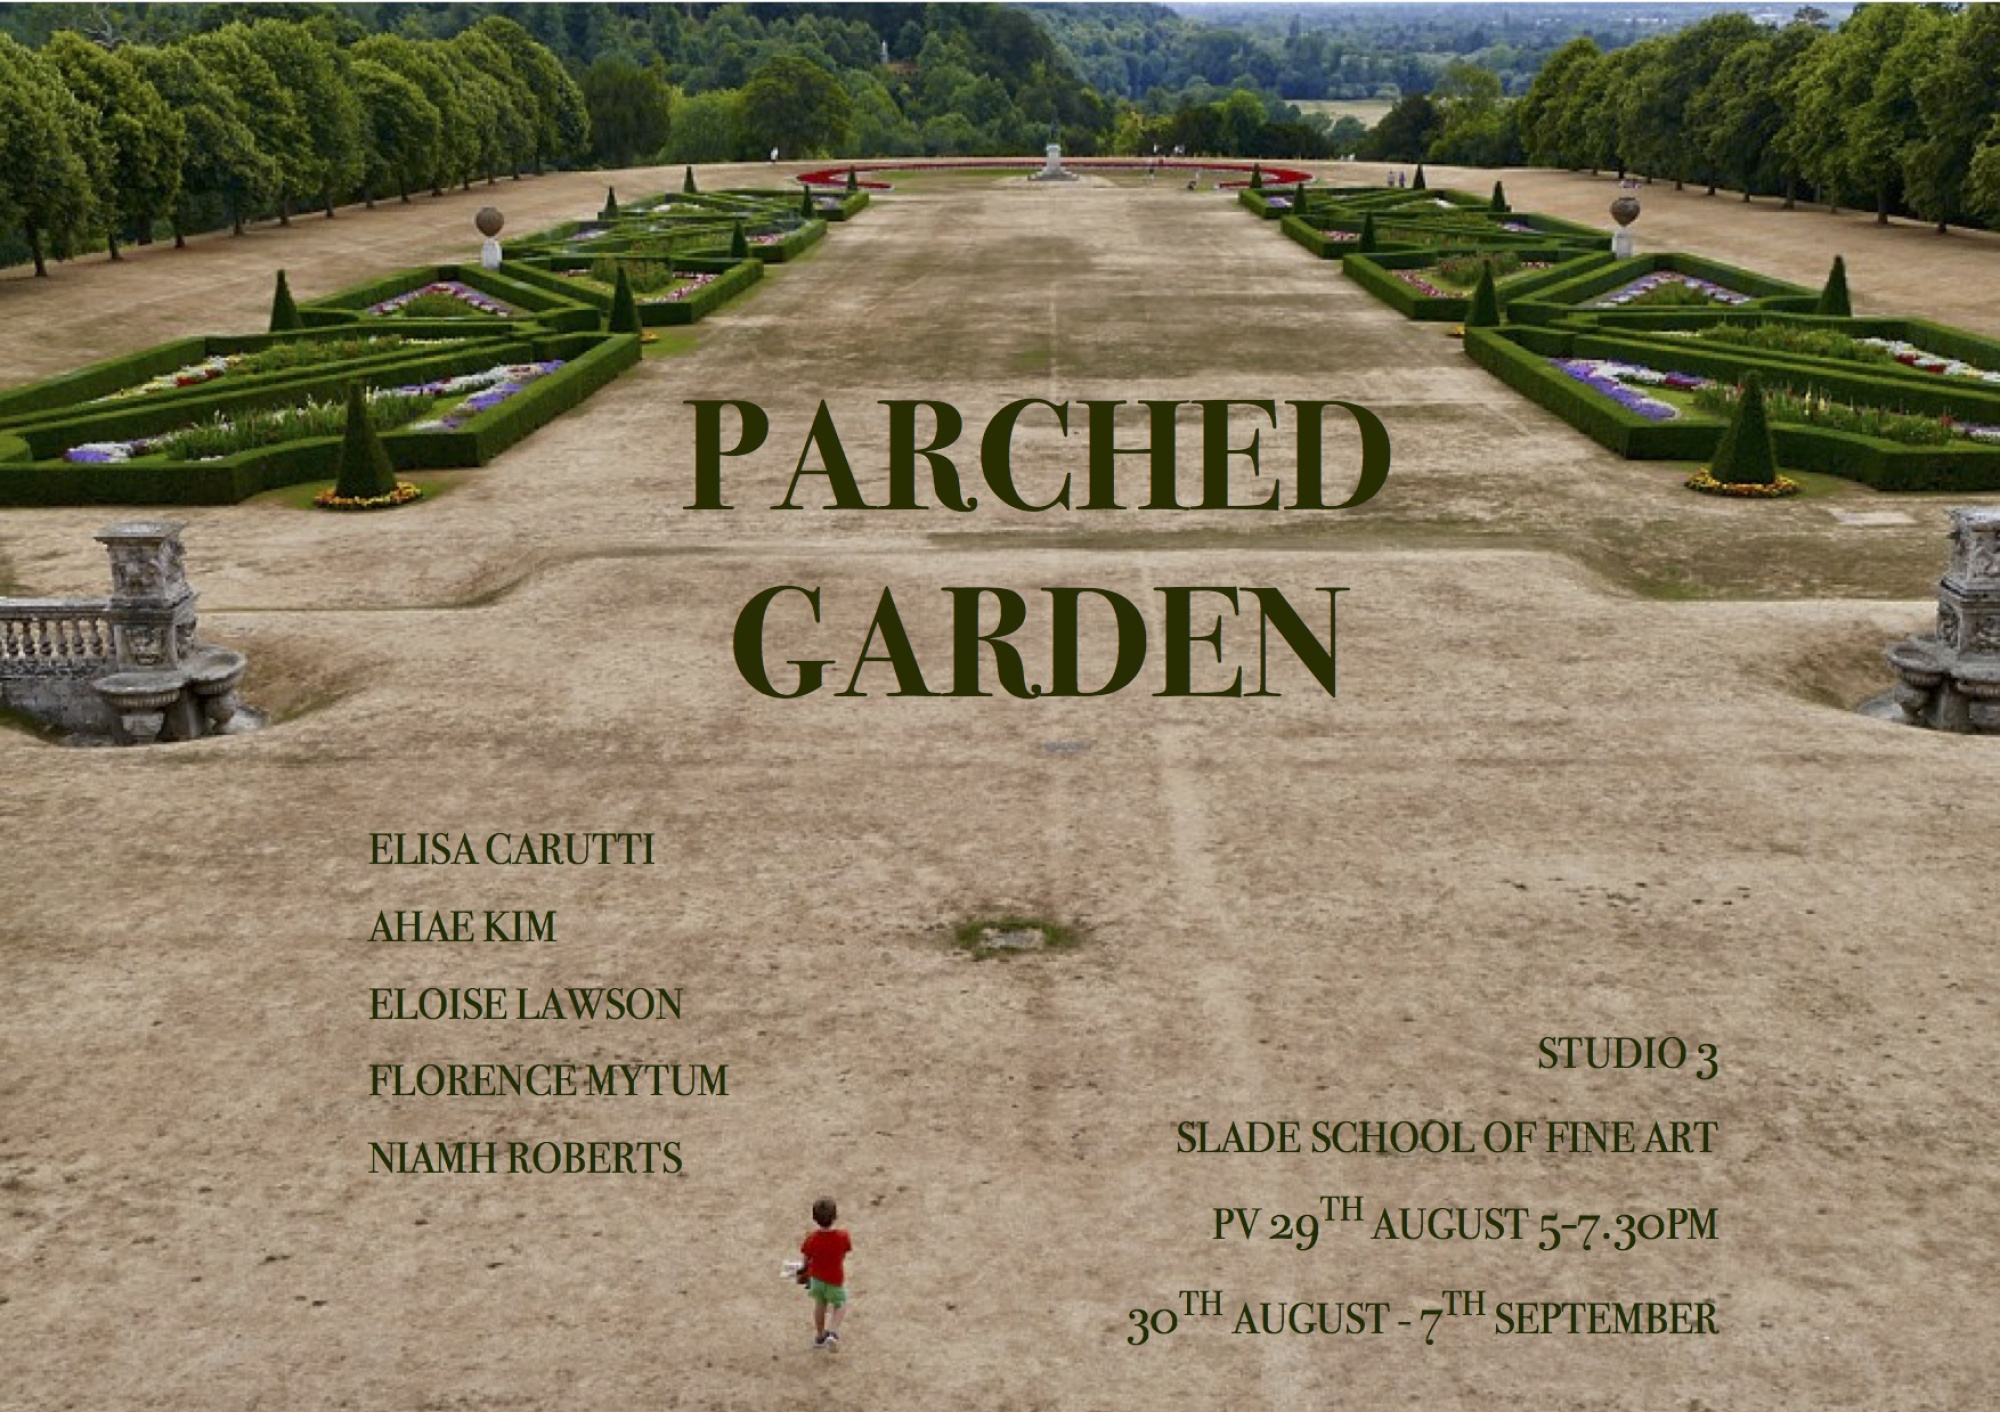 Parched Garden - Slade School of Fine Art